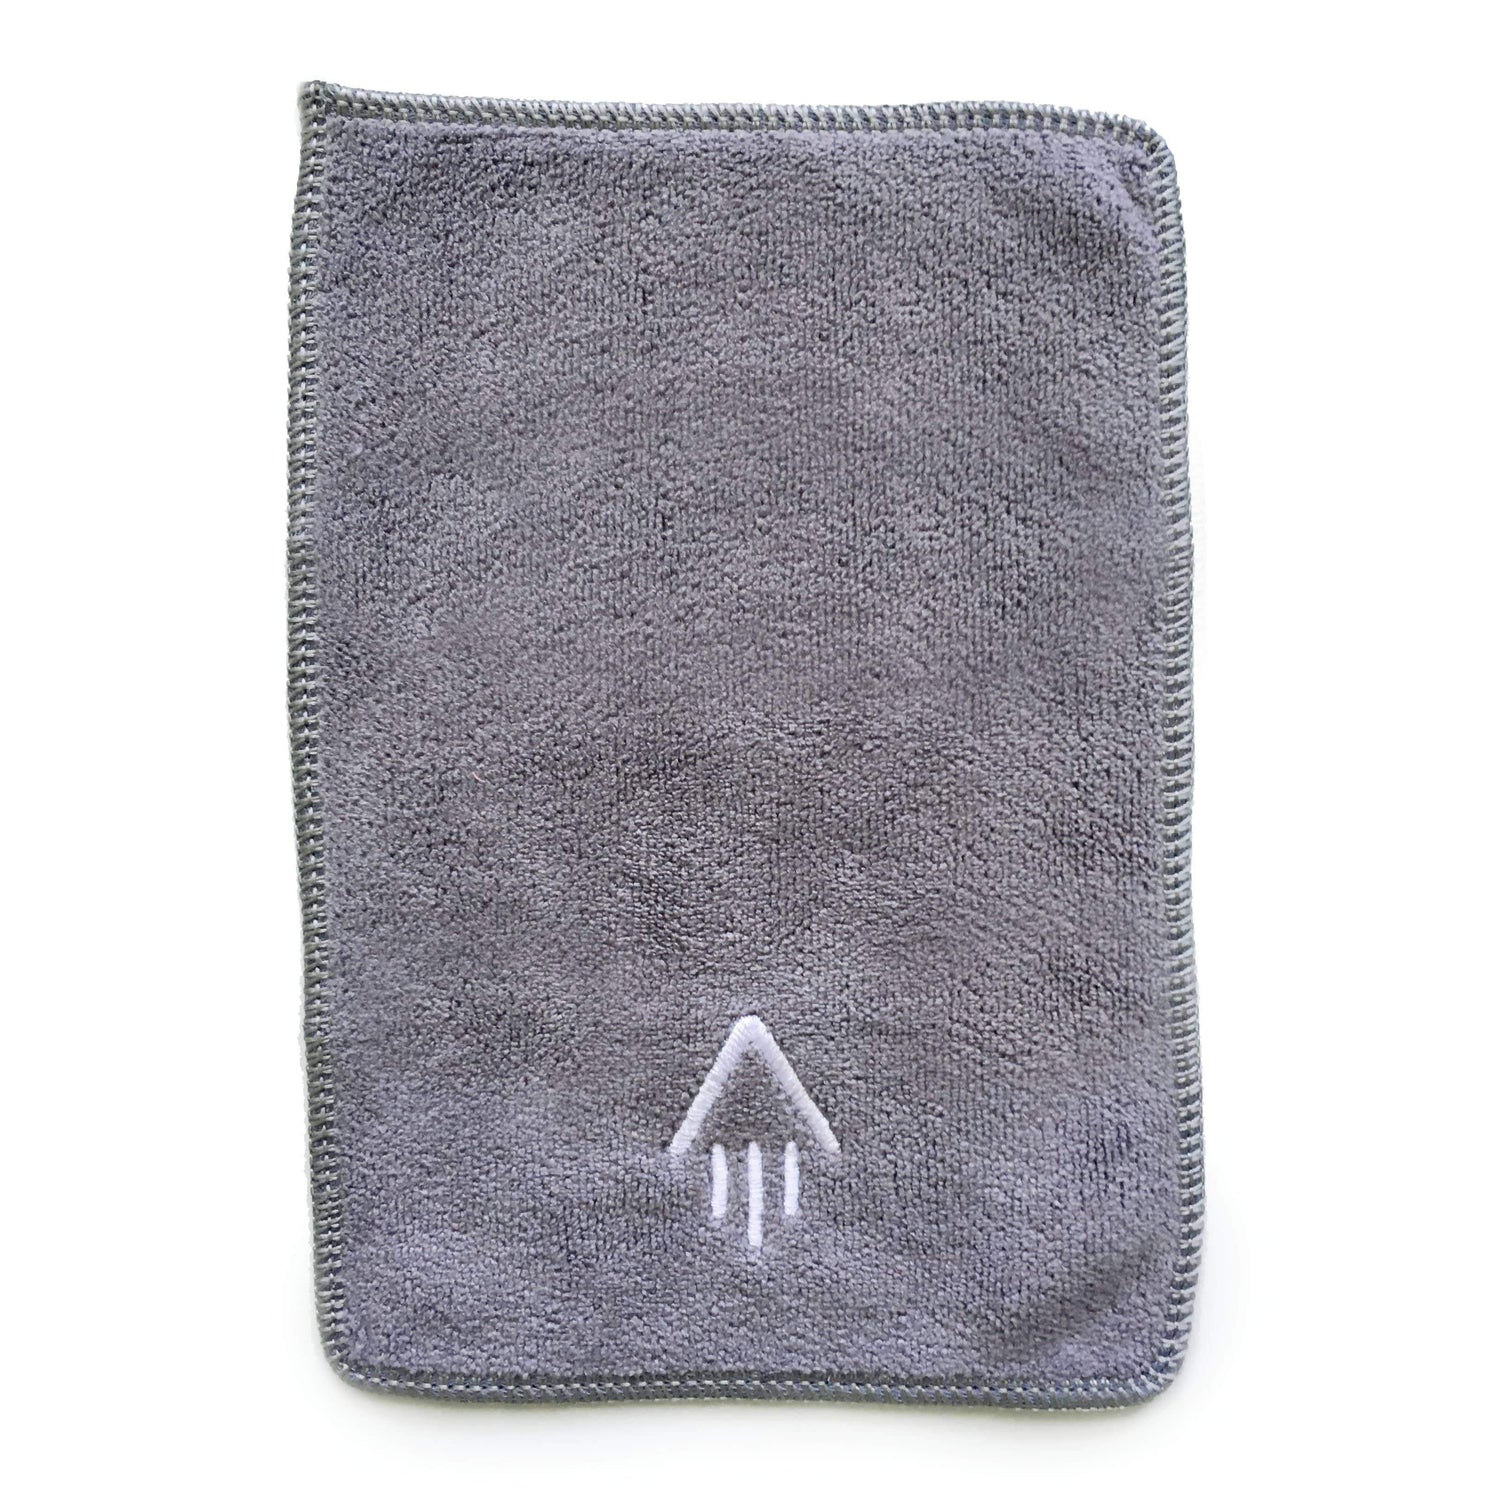 Rocketbook Accessories Microfiber Towel